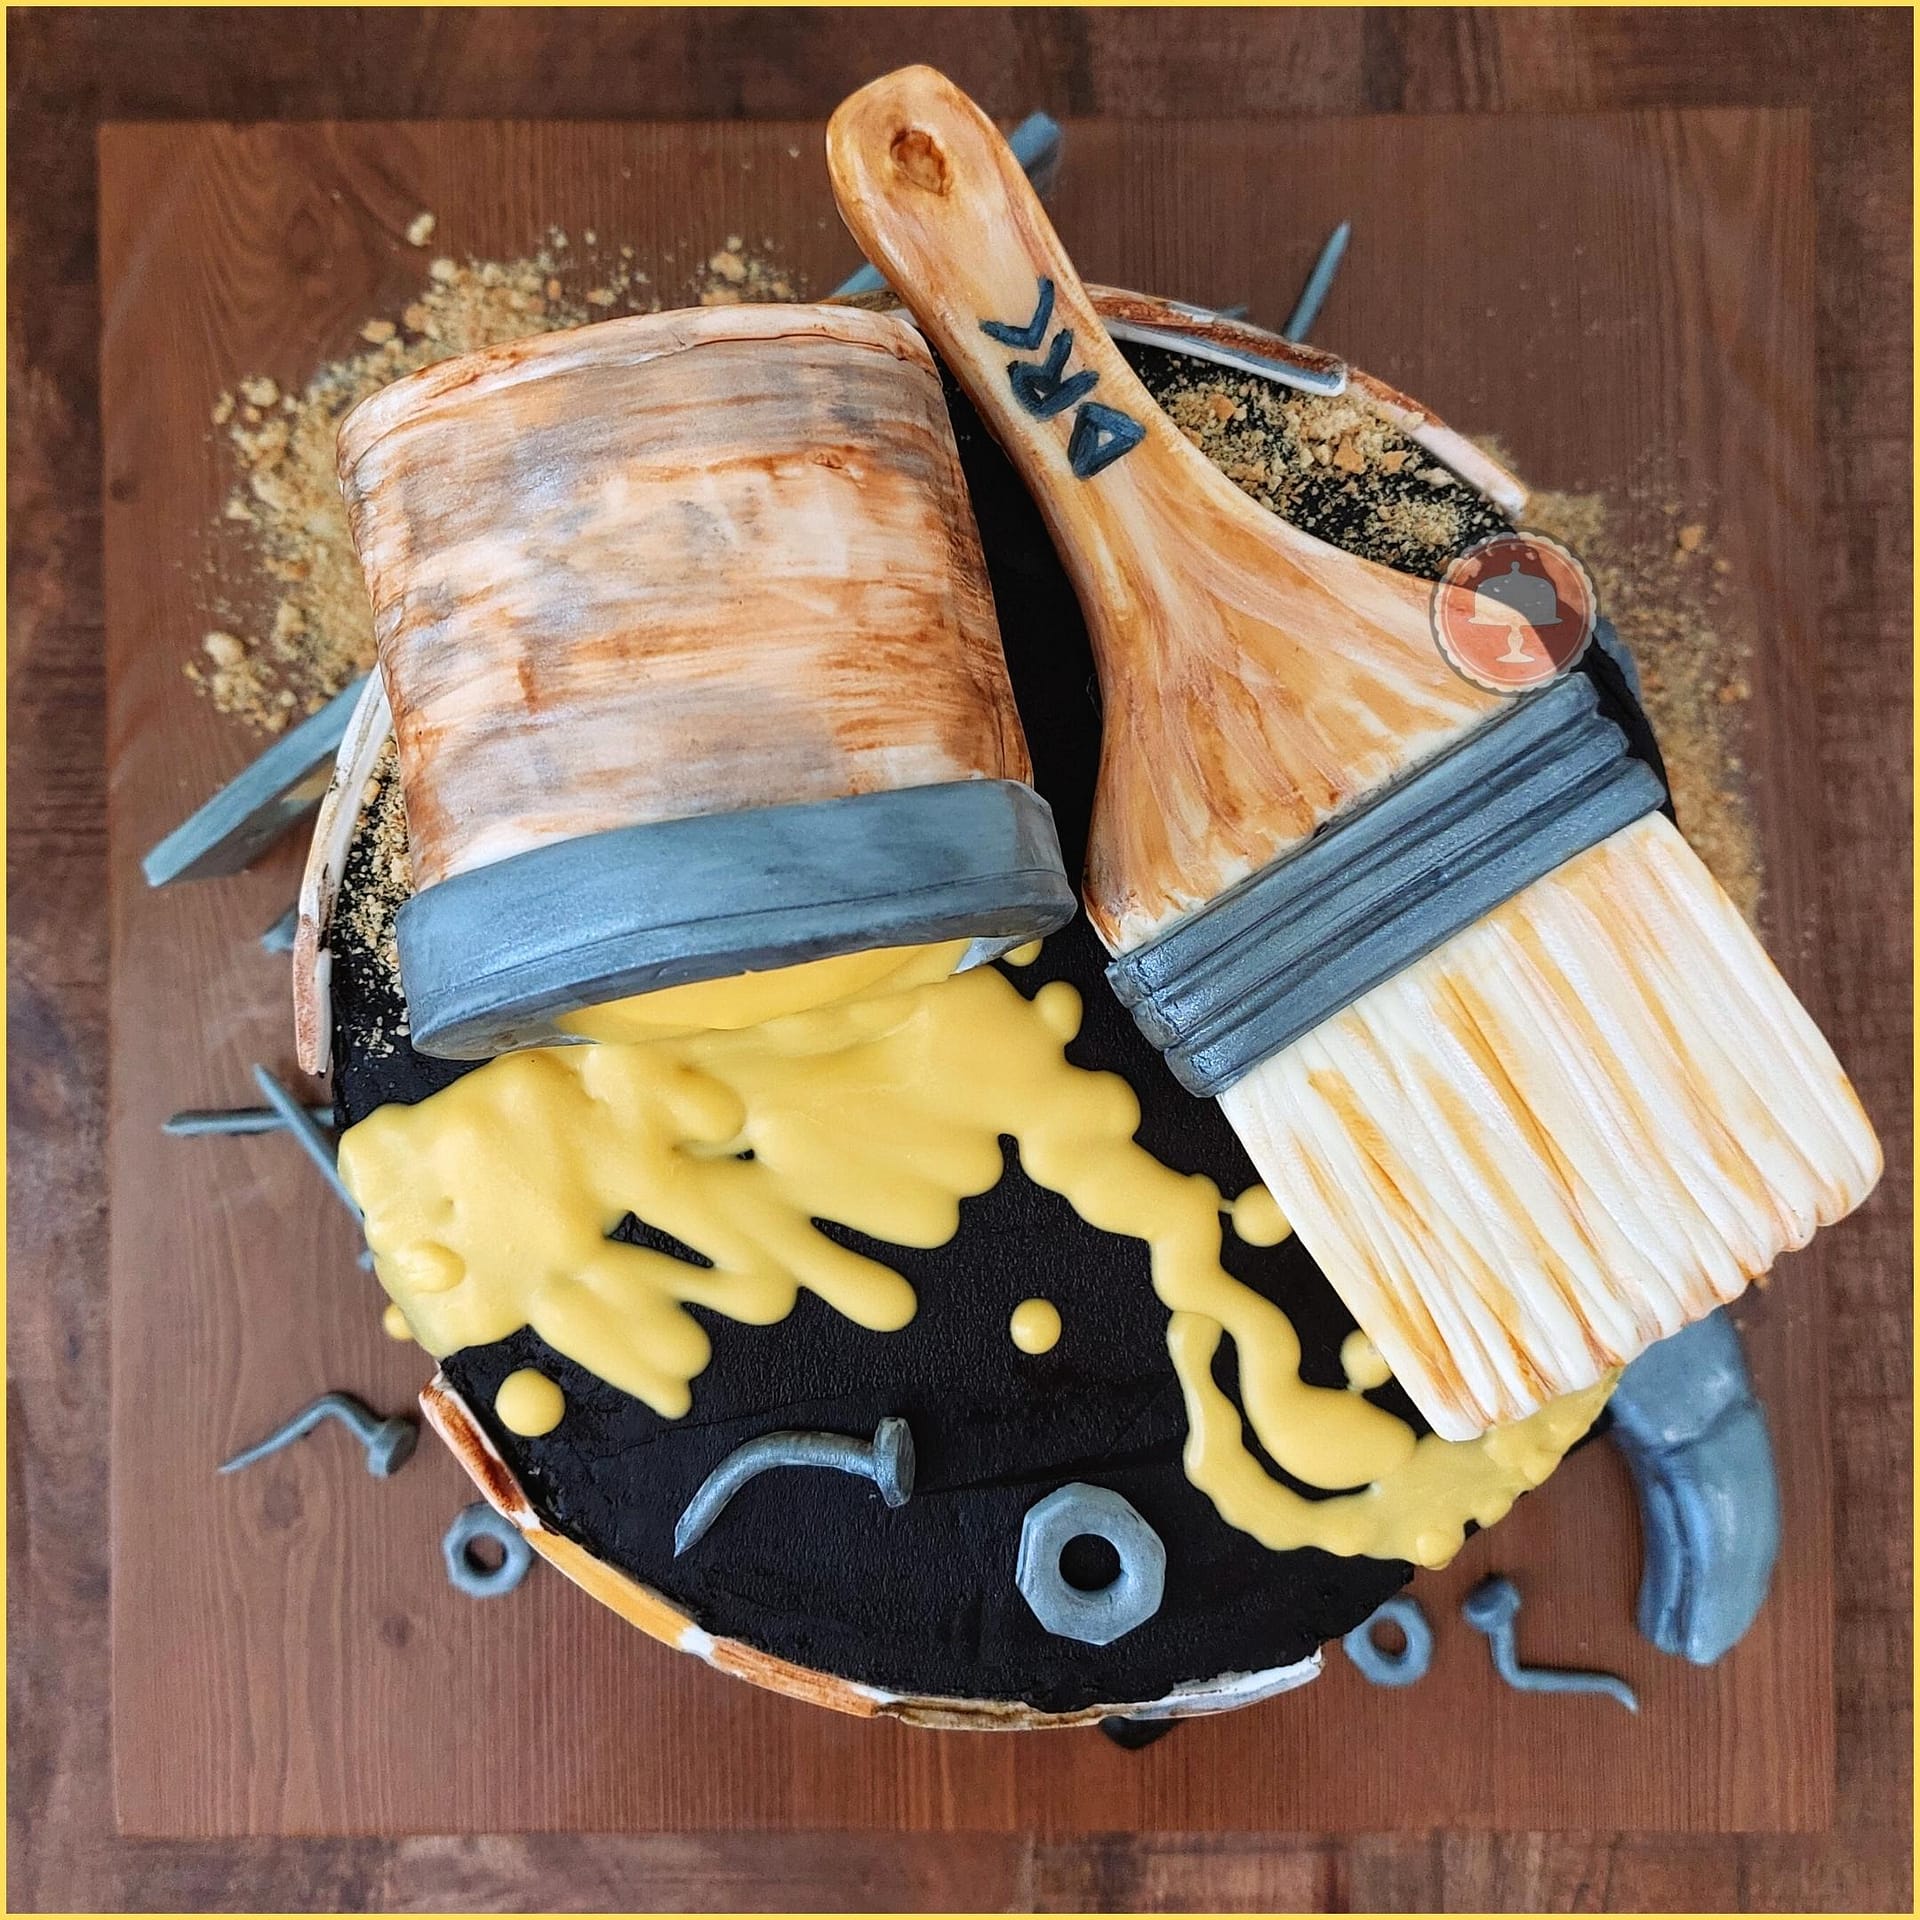 Popular Carpenters Cake Ideas - Tool Cake - CakeLovesMe - Recipes, New Cake Designs! - new york style cheesecake recipe -